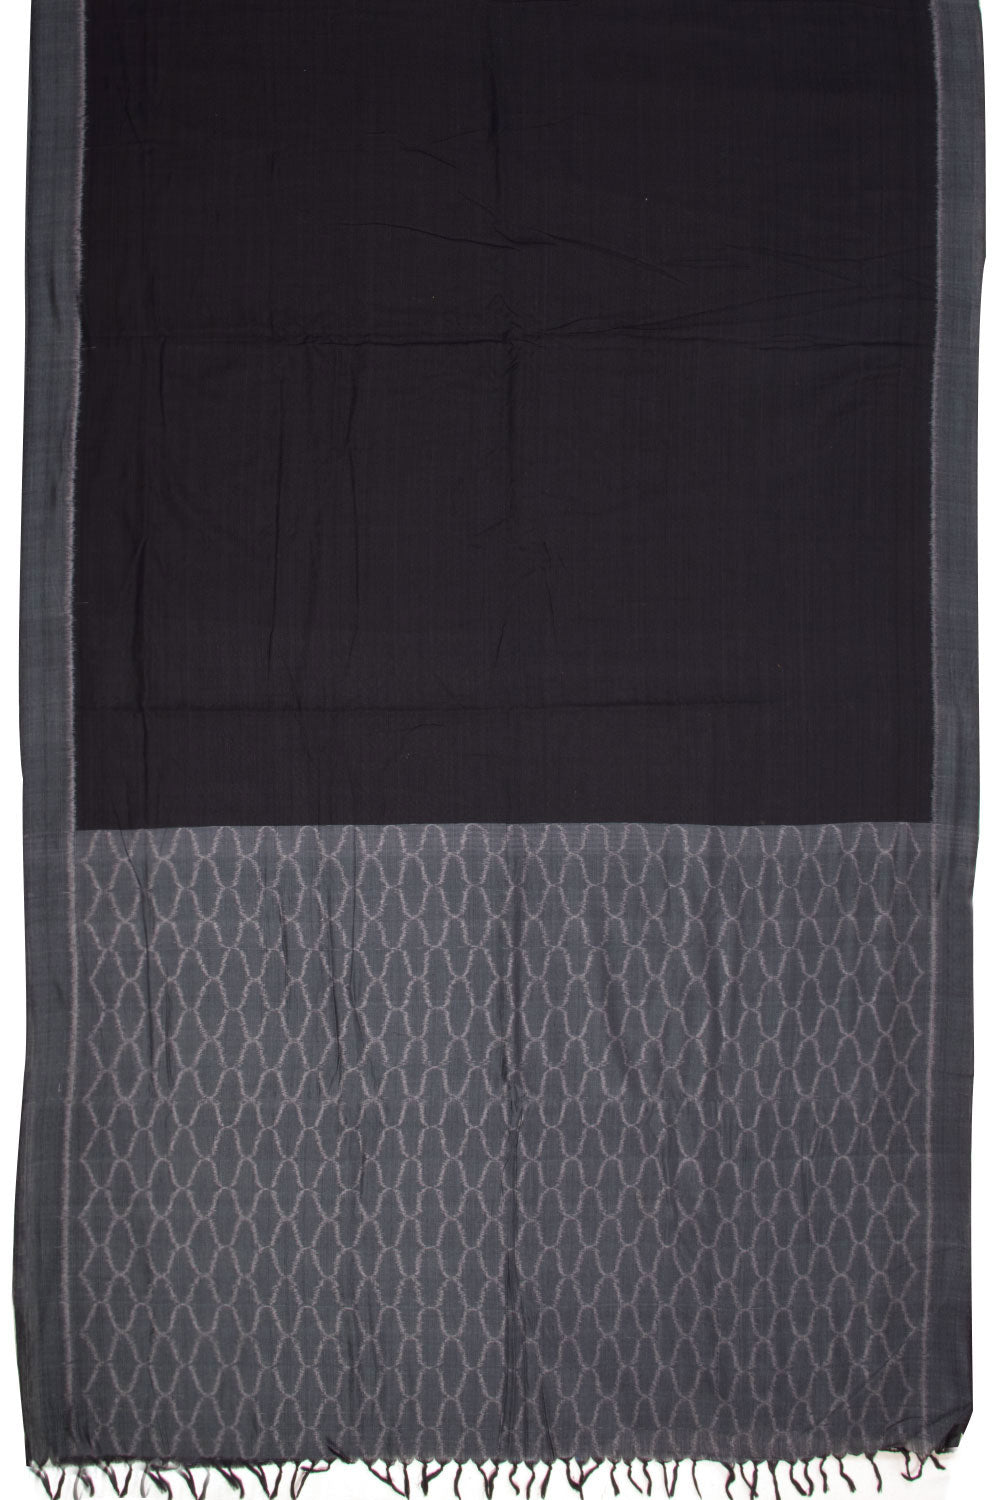 Black Handloom Maniabandha Ikat Cotton Saree